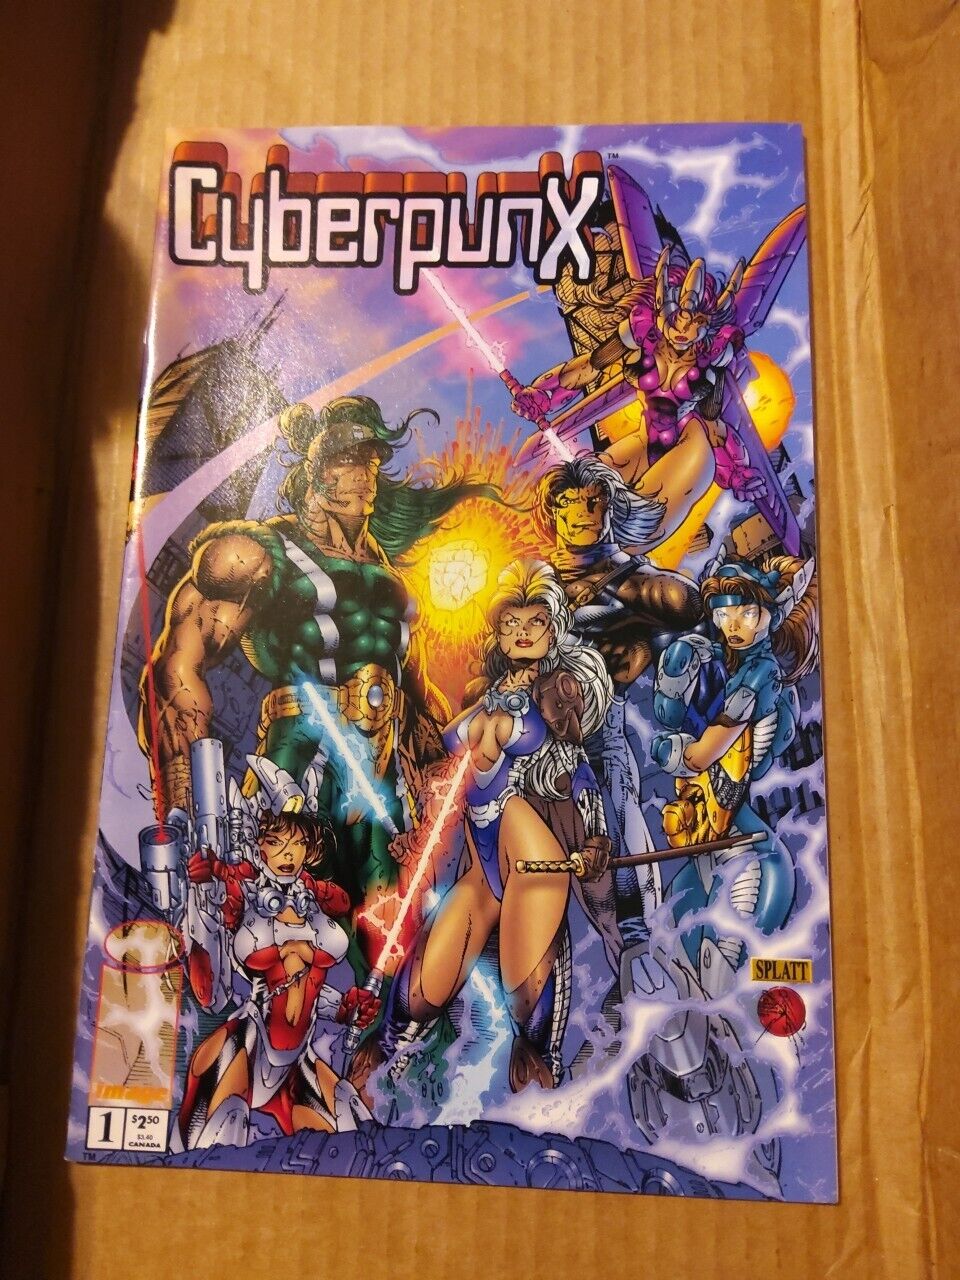  Cyberpunx #1  1996  Image comics